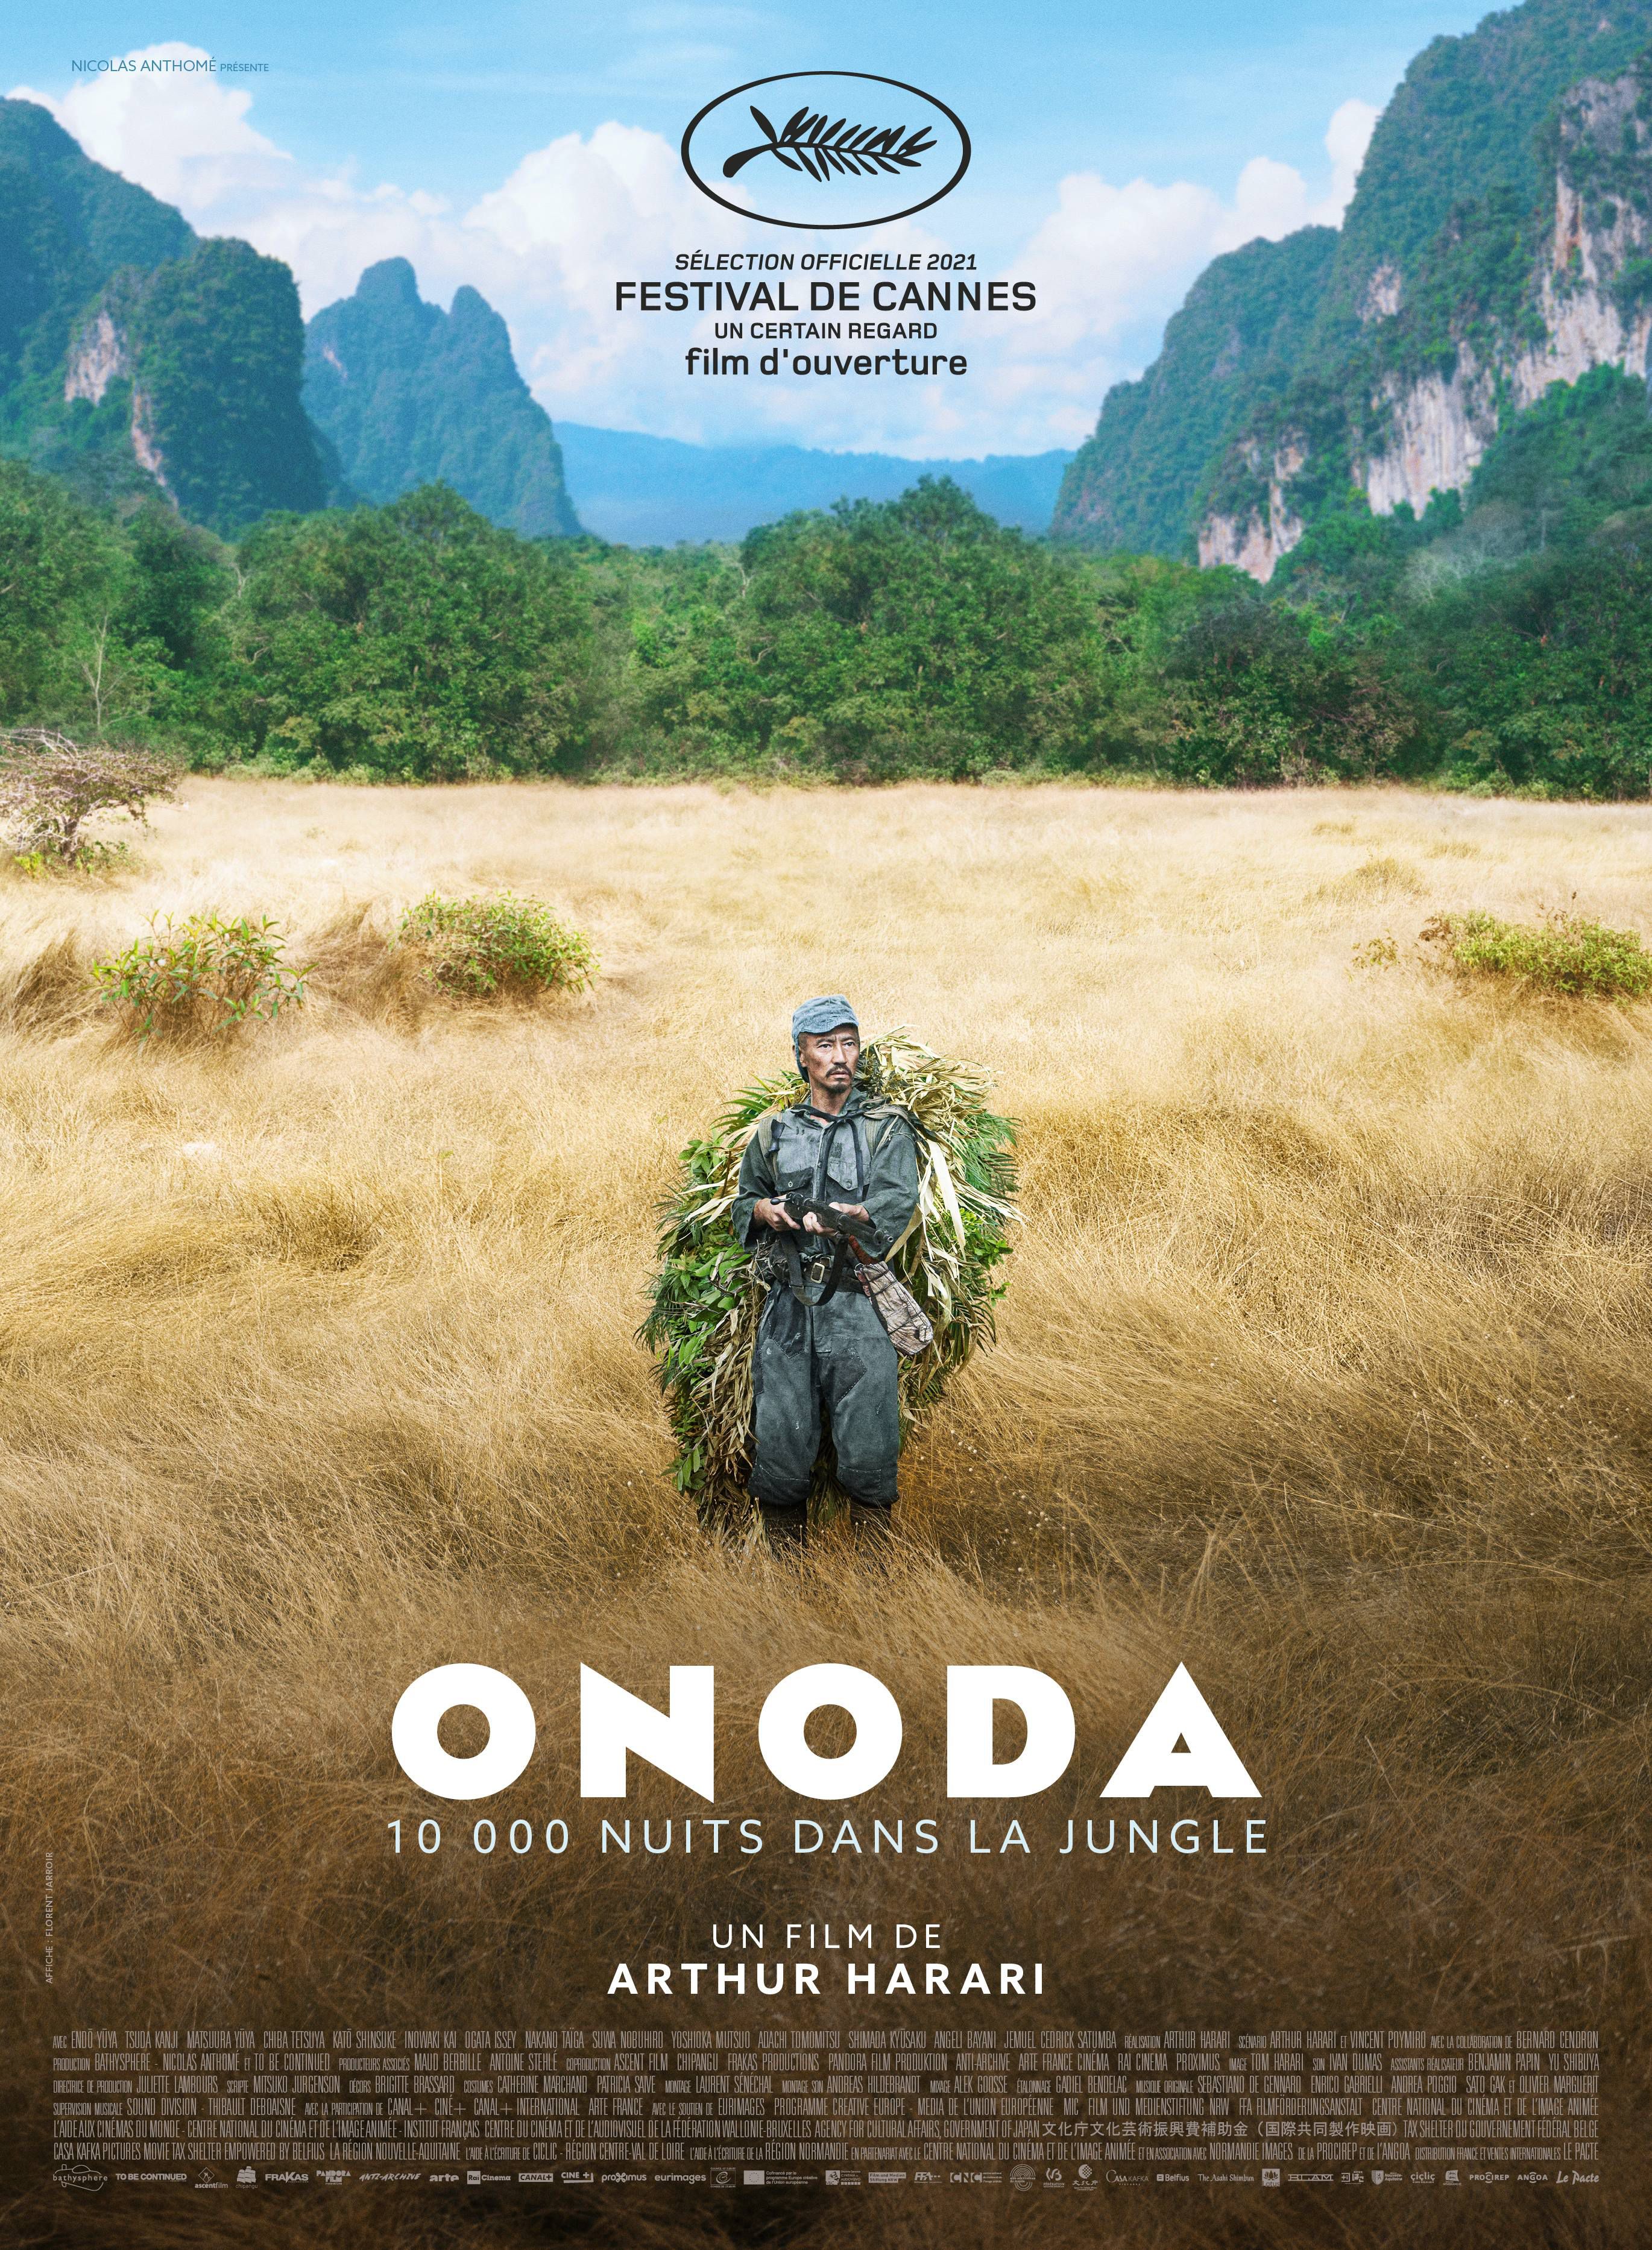 Onoda, 10 000 nuits dans la jungle - Film (2021) streaming VF gratuit complet